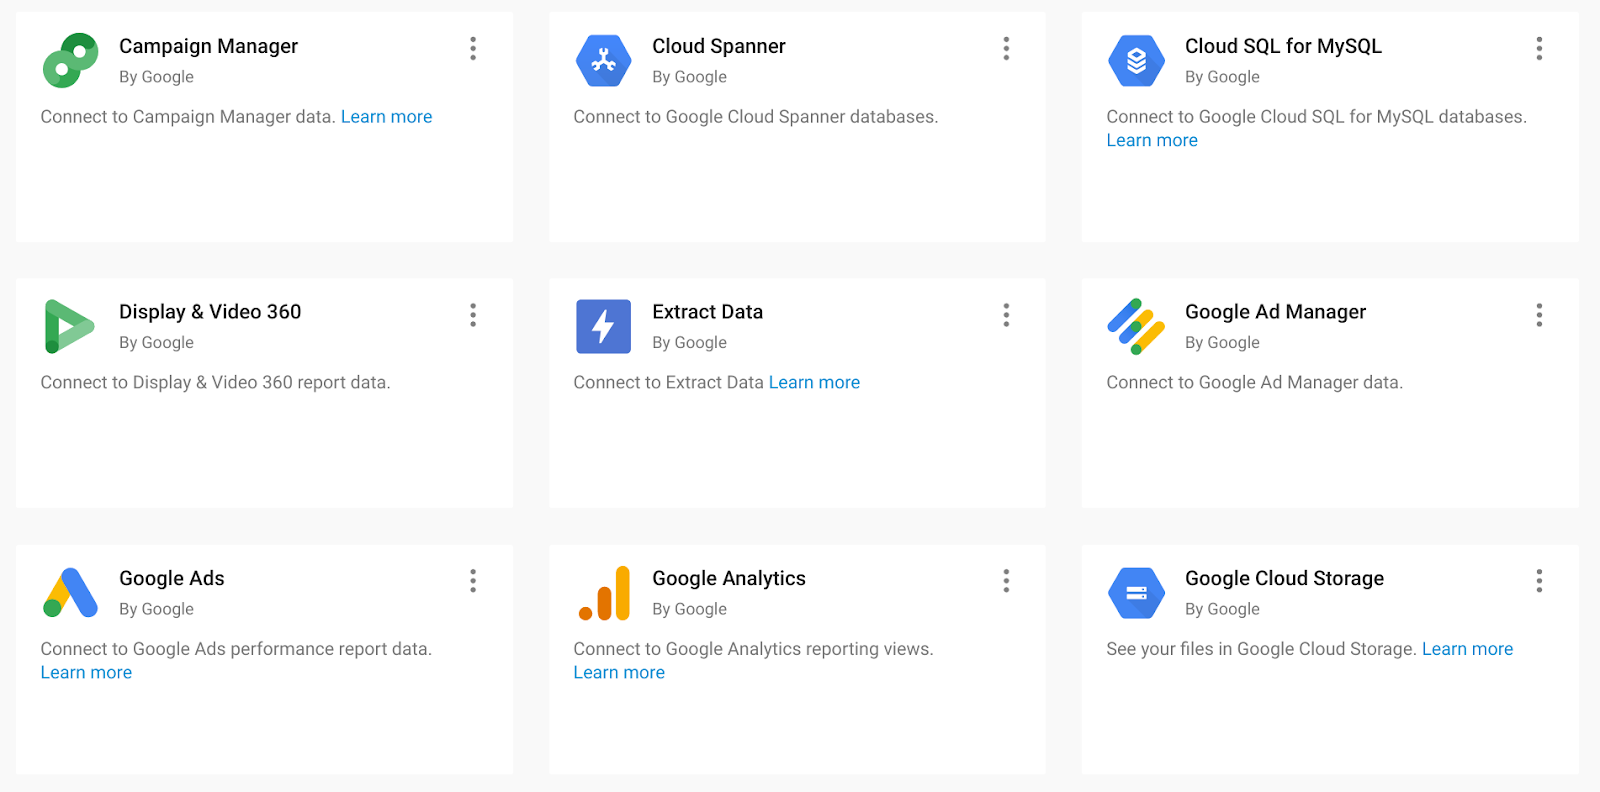 Google Data Studio has many connectors available